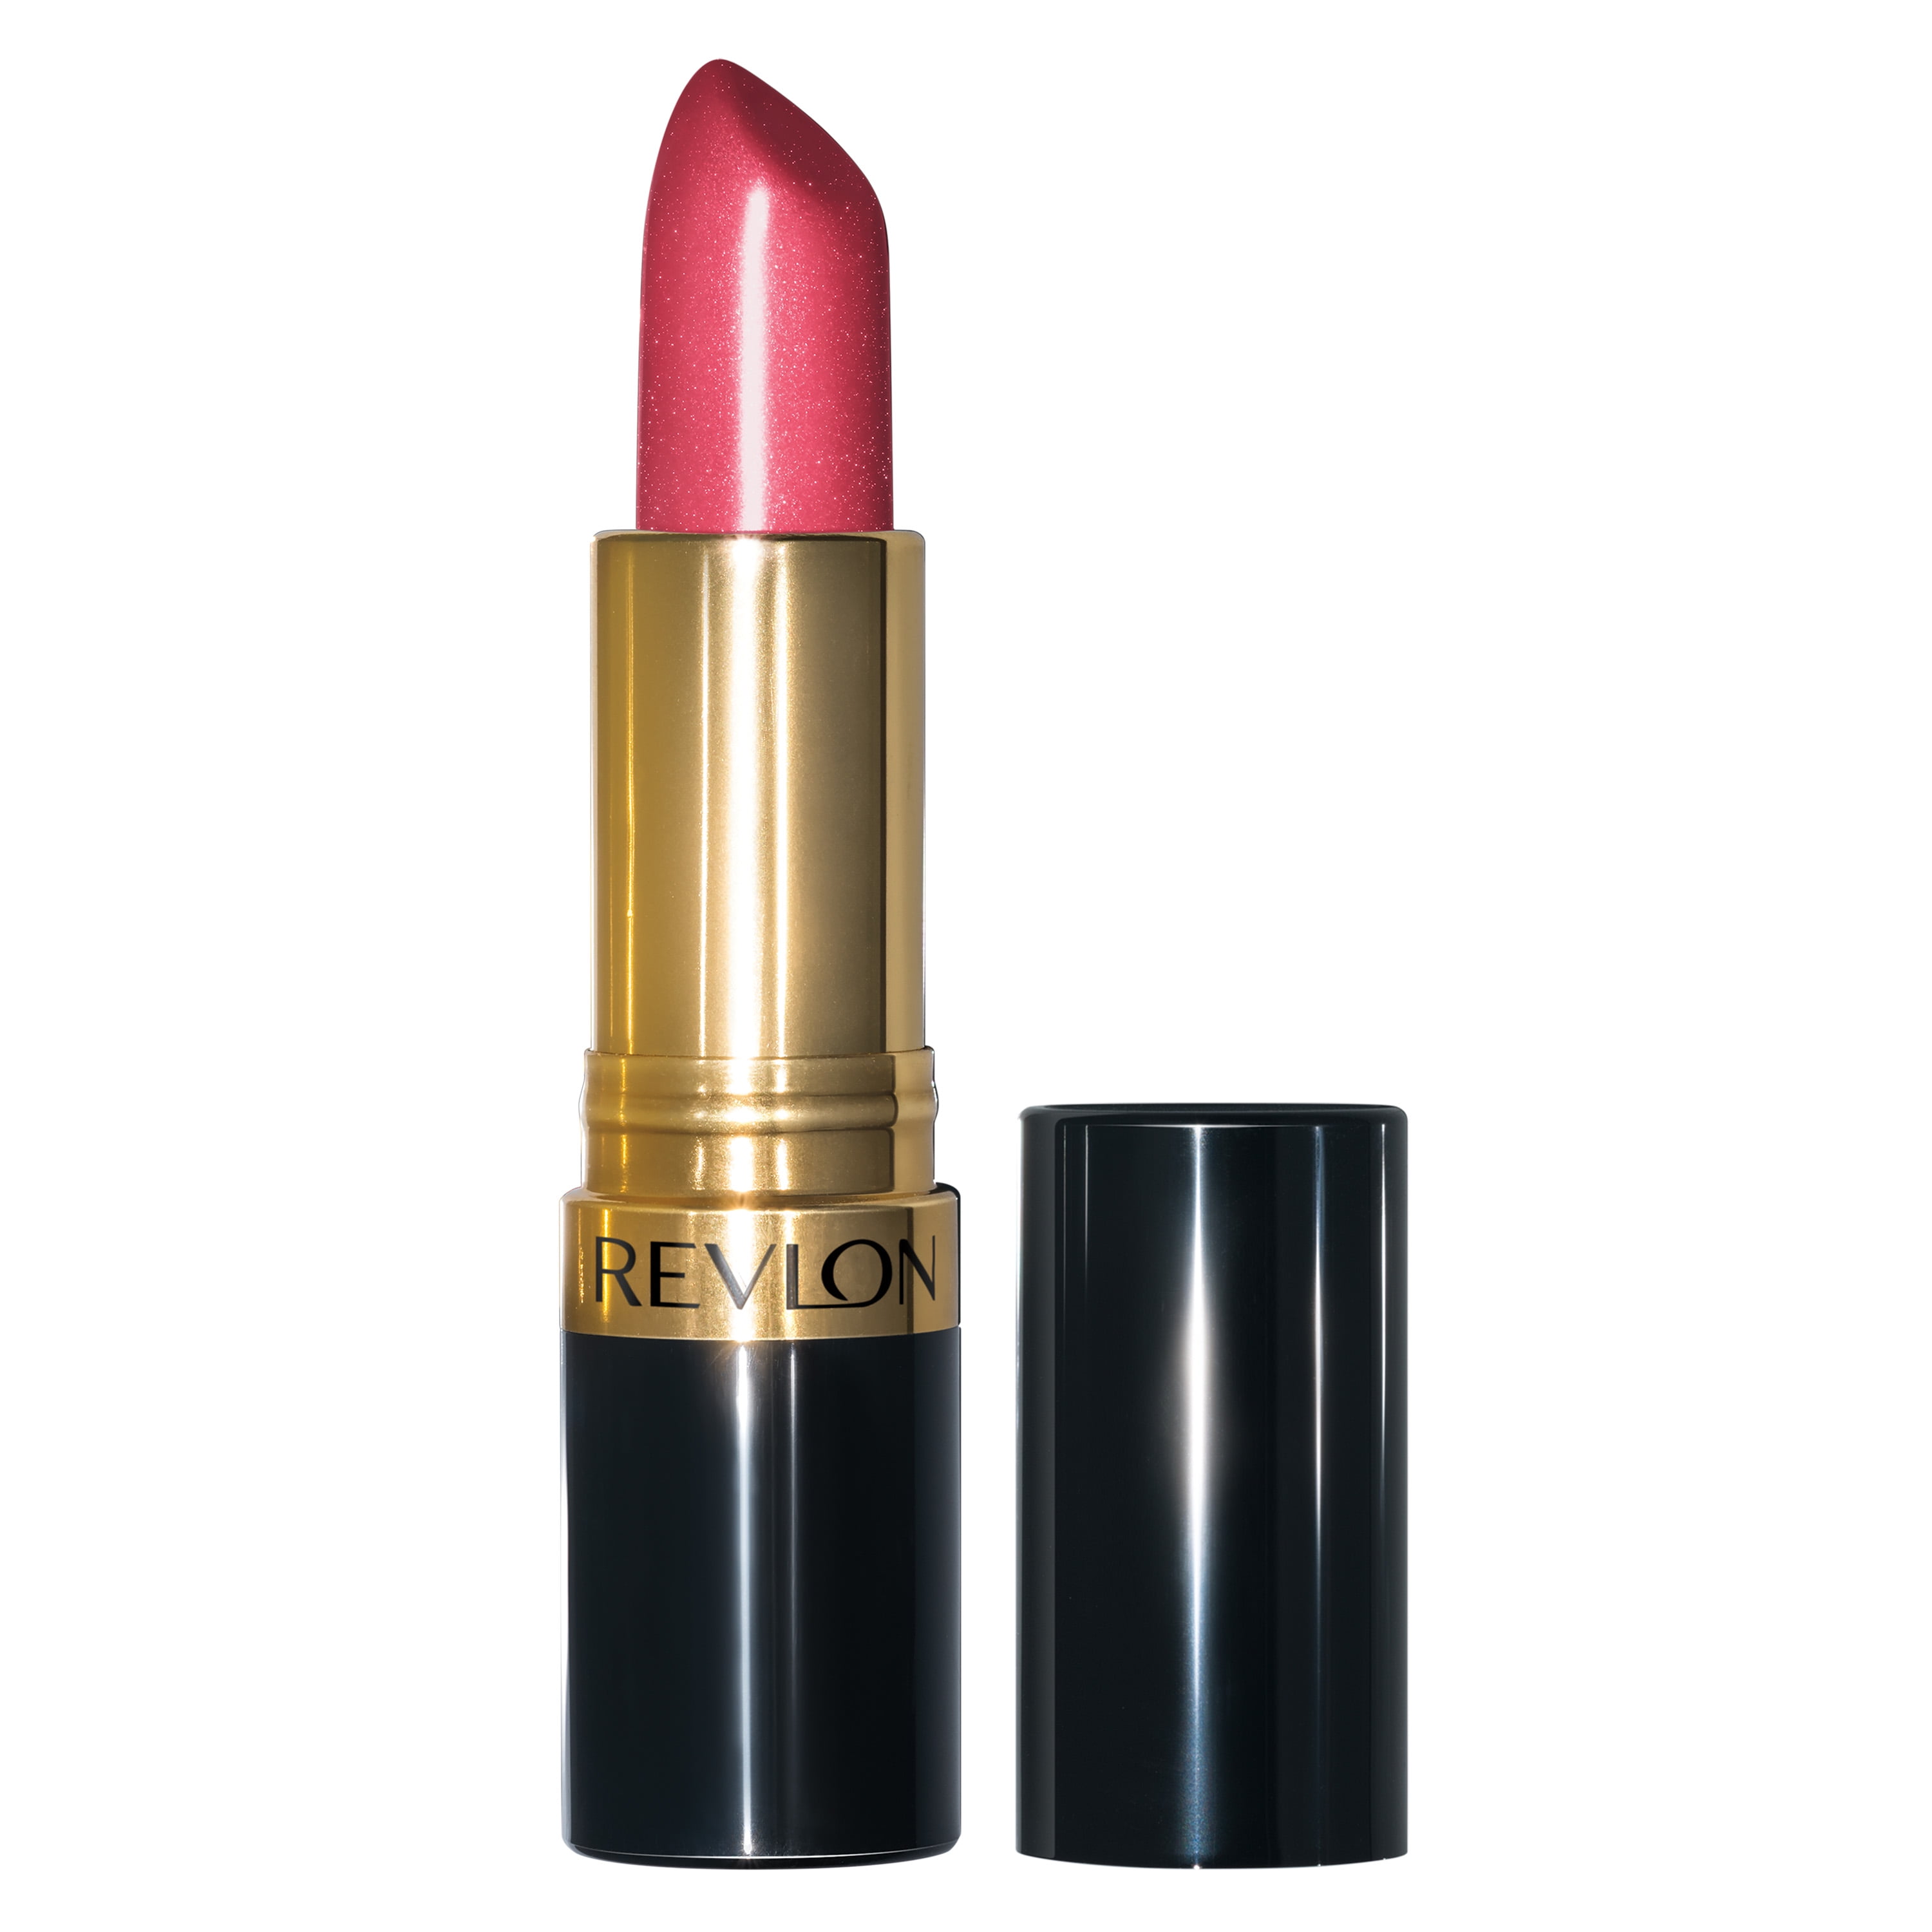 Revlon Super Lustrous Lipstick, Pearl Finish, High Impact Lipcolor with Moisturizing Creamy Formula, Infused with Vitamin E and Avocado Oil, 430 Softsilver Rose, 0.15 oz